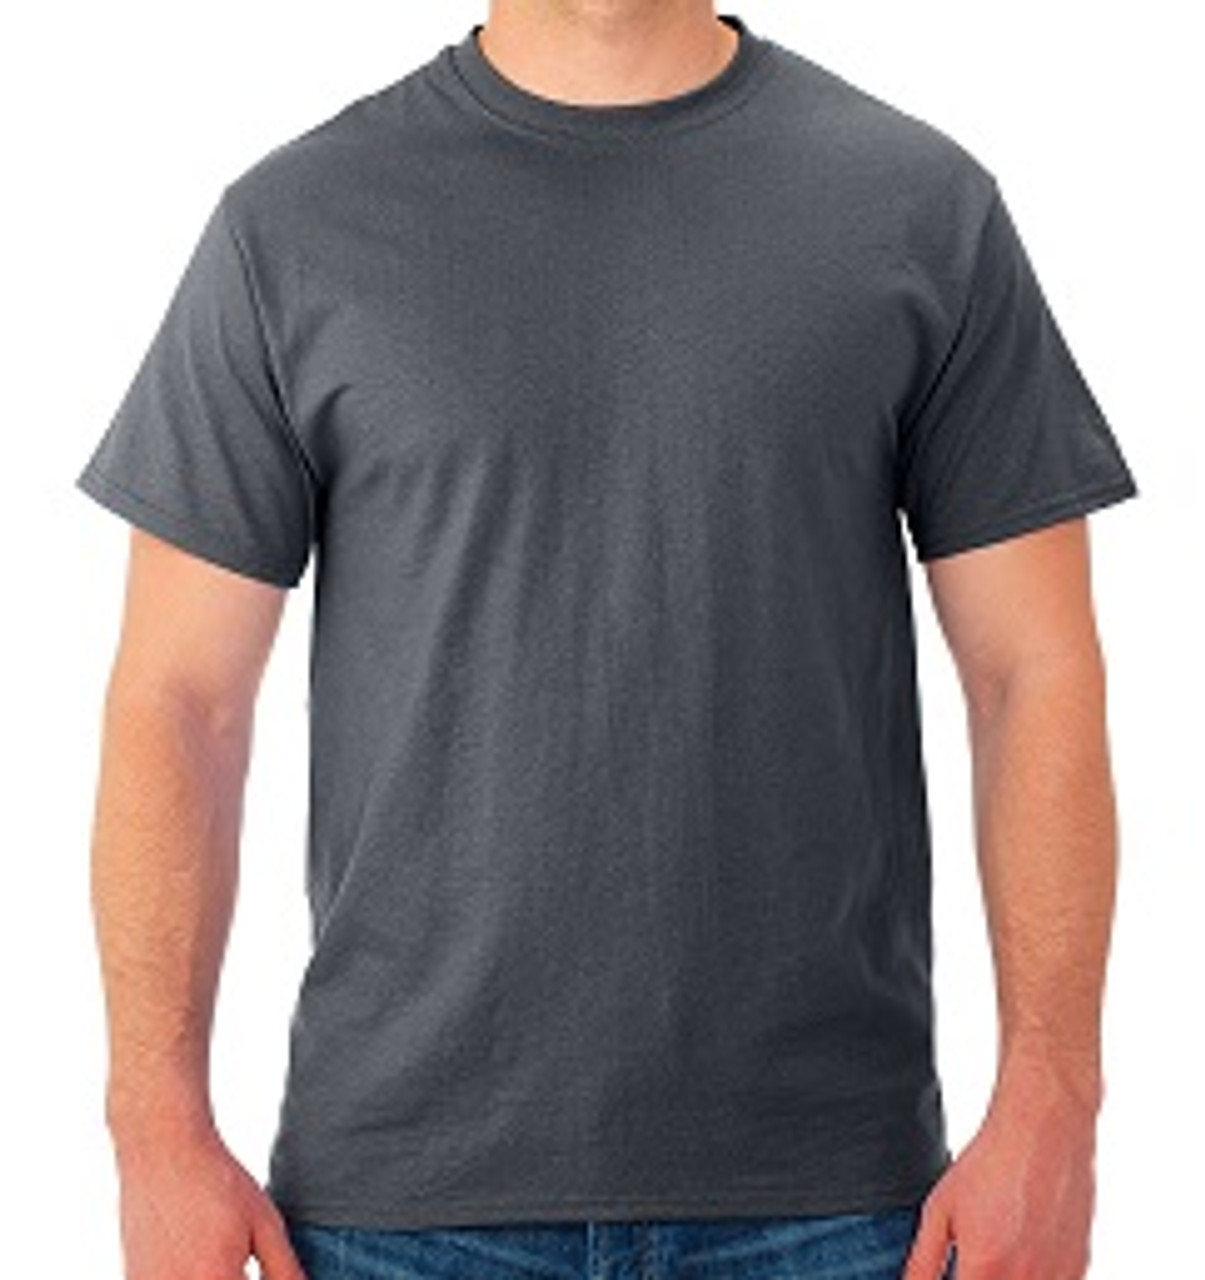 XL - Adult - Charcoal Grey - Jerzees - Custom T-shirt